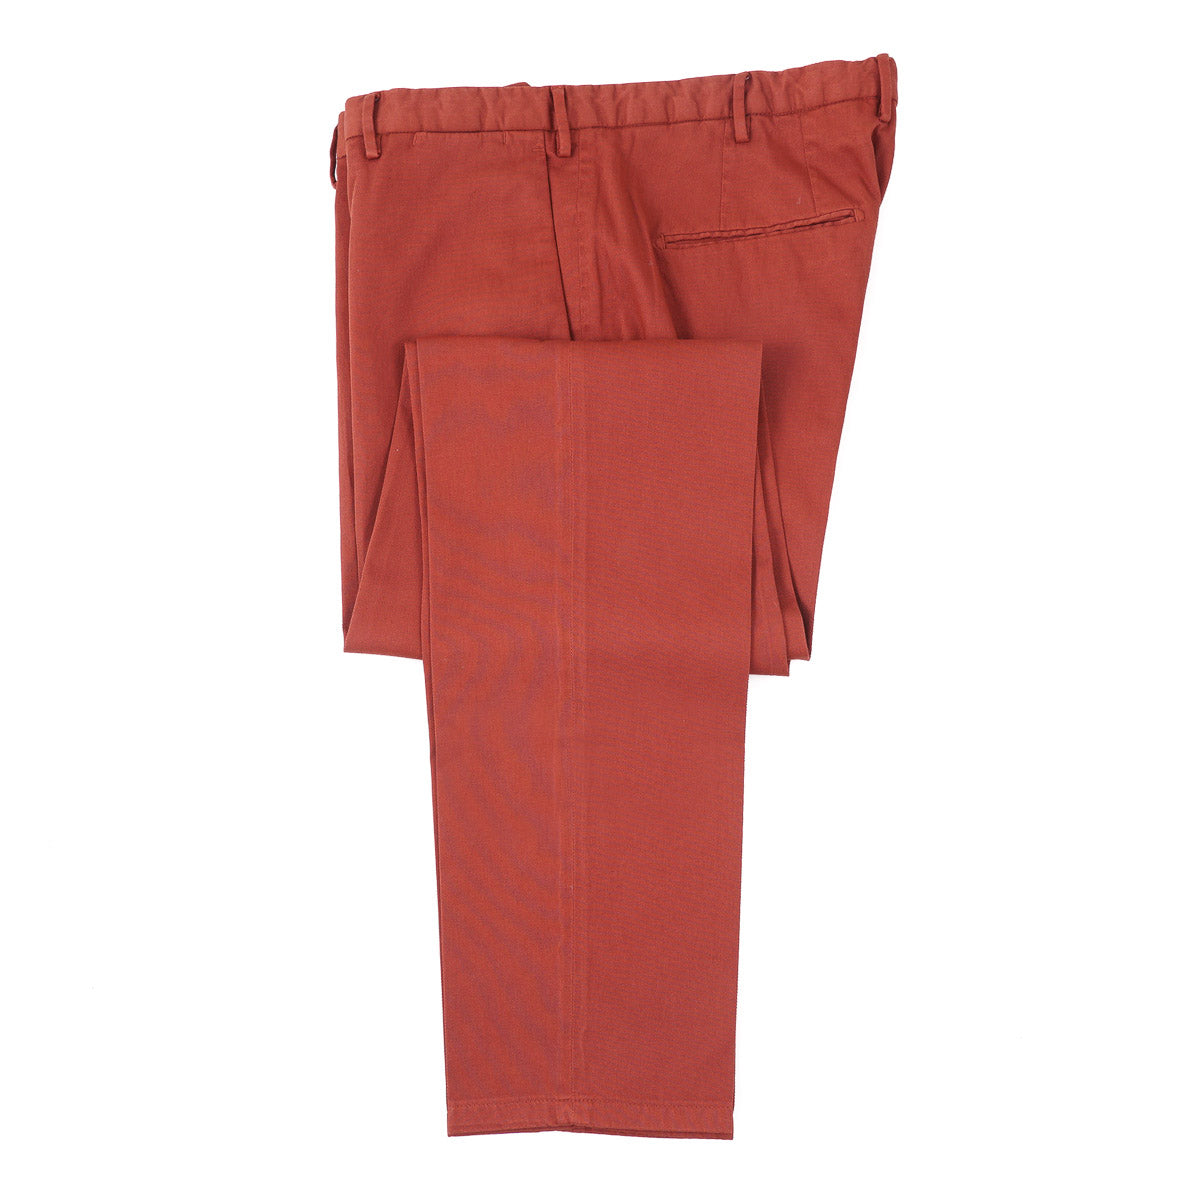 Boglioli Slim-Fit Woven Cotton Pants - Top Shelf Apparel